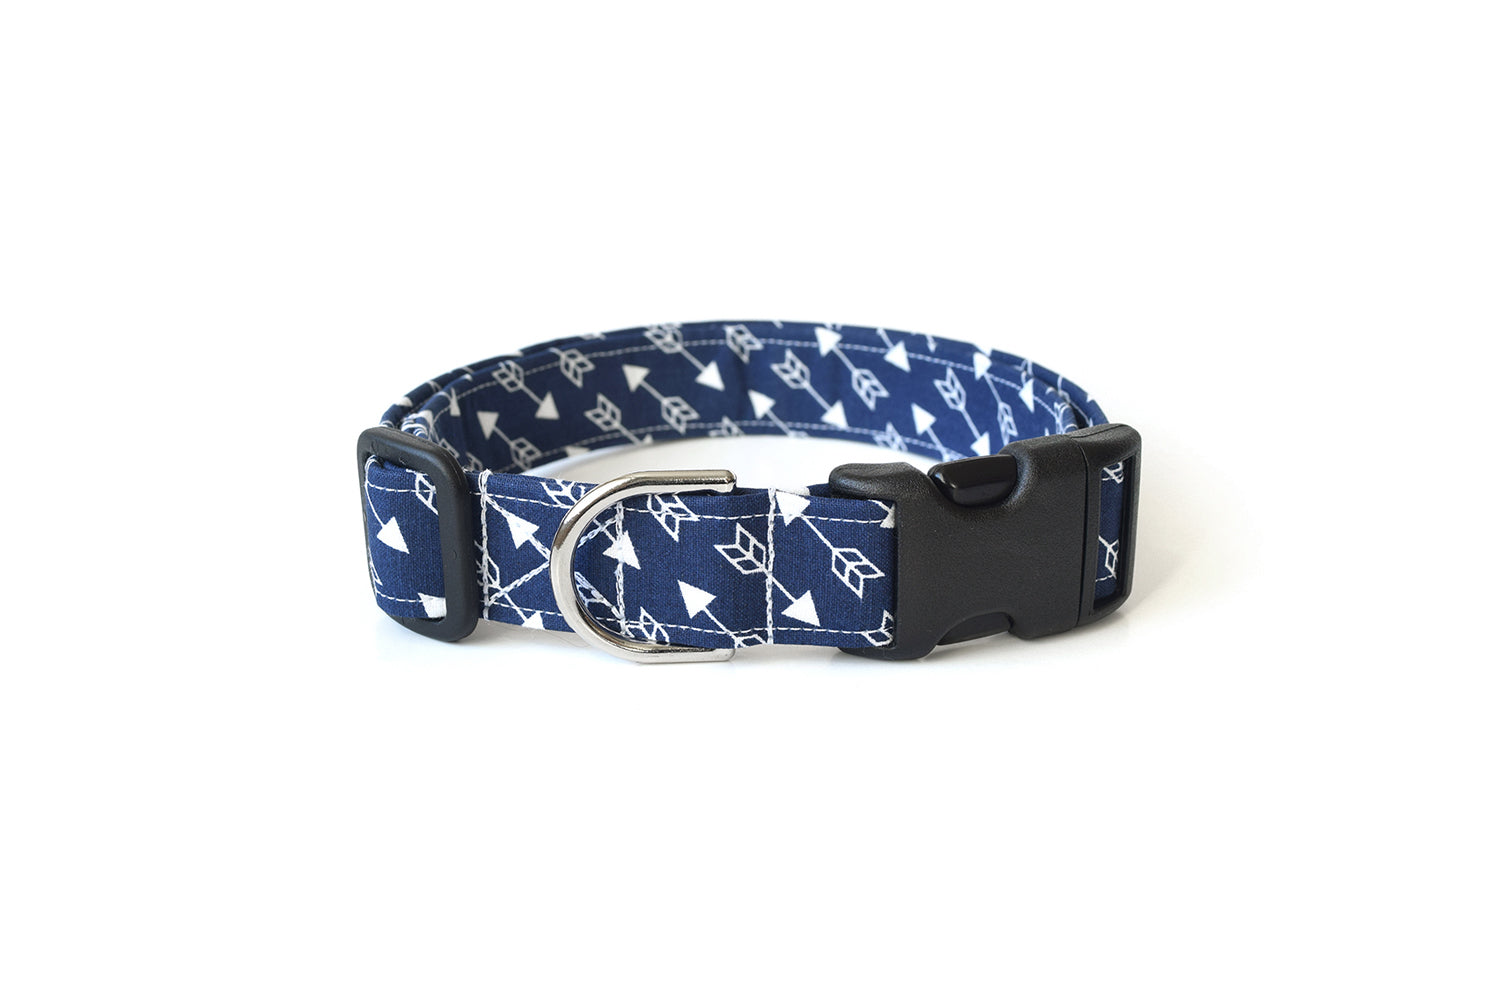 Navy Blue & White Arrows Dog Collar - Handmade by Kira's Pet Shop